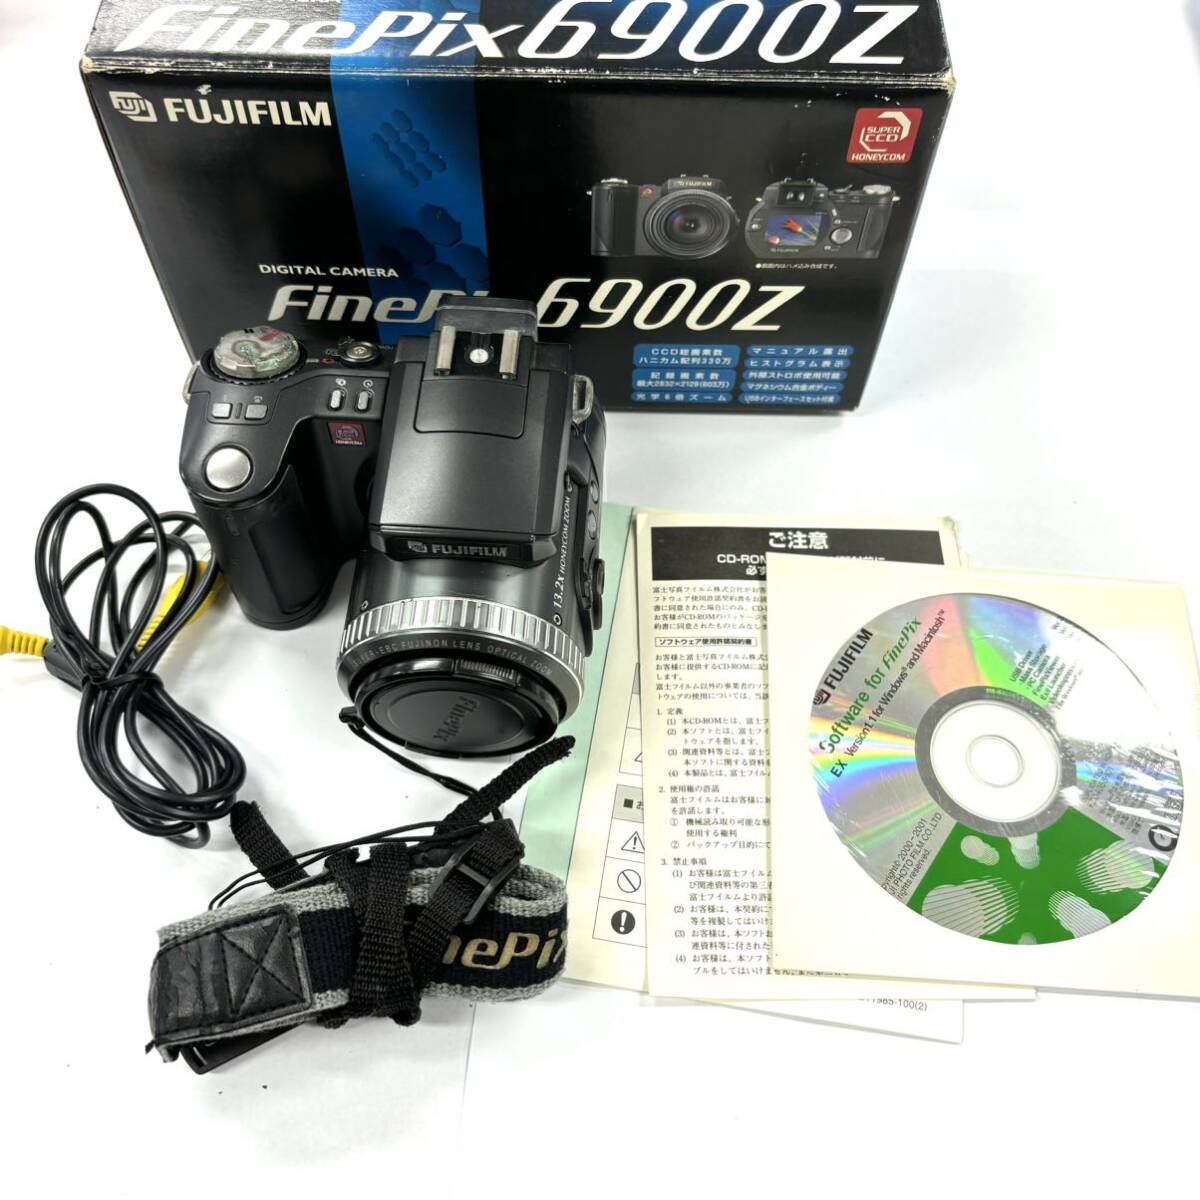 H2877 デジタルカメラ FUJIFILM FinePix 6900Z 13.2× HONEYCOM ZOOM SUPER-EBC FUJINON LENS OPTICAL 1:2.8-3.1 f＝7.8-46.8mm 中古の画像1